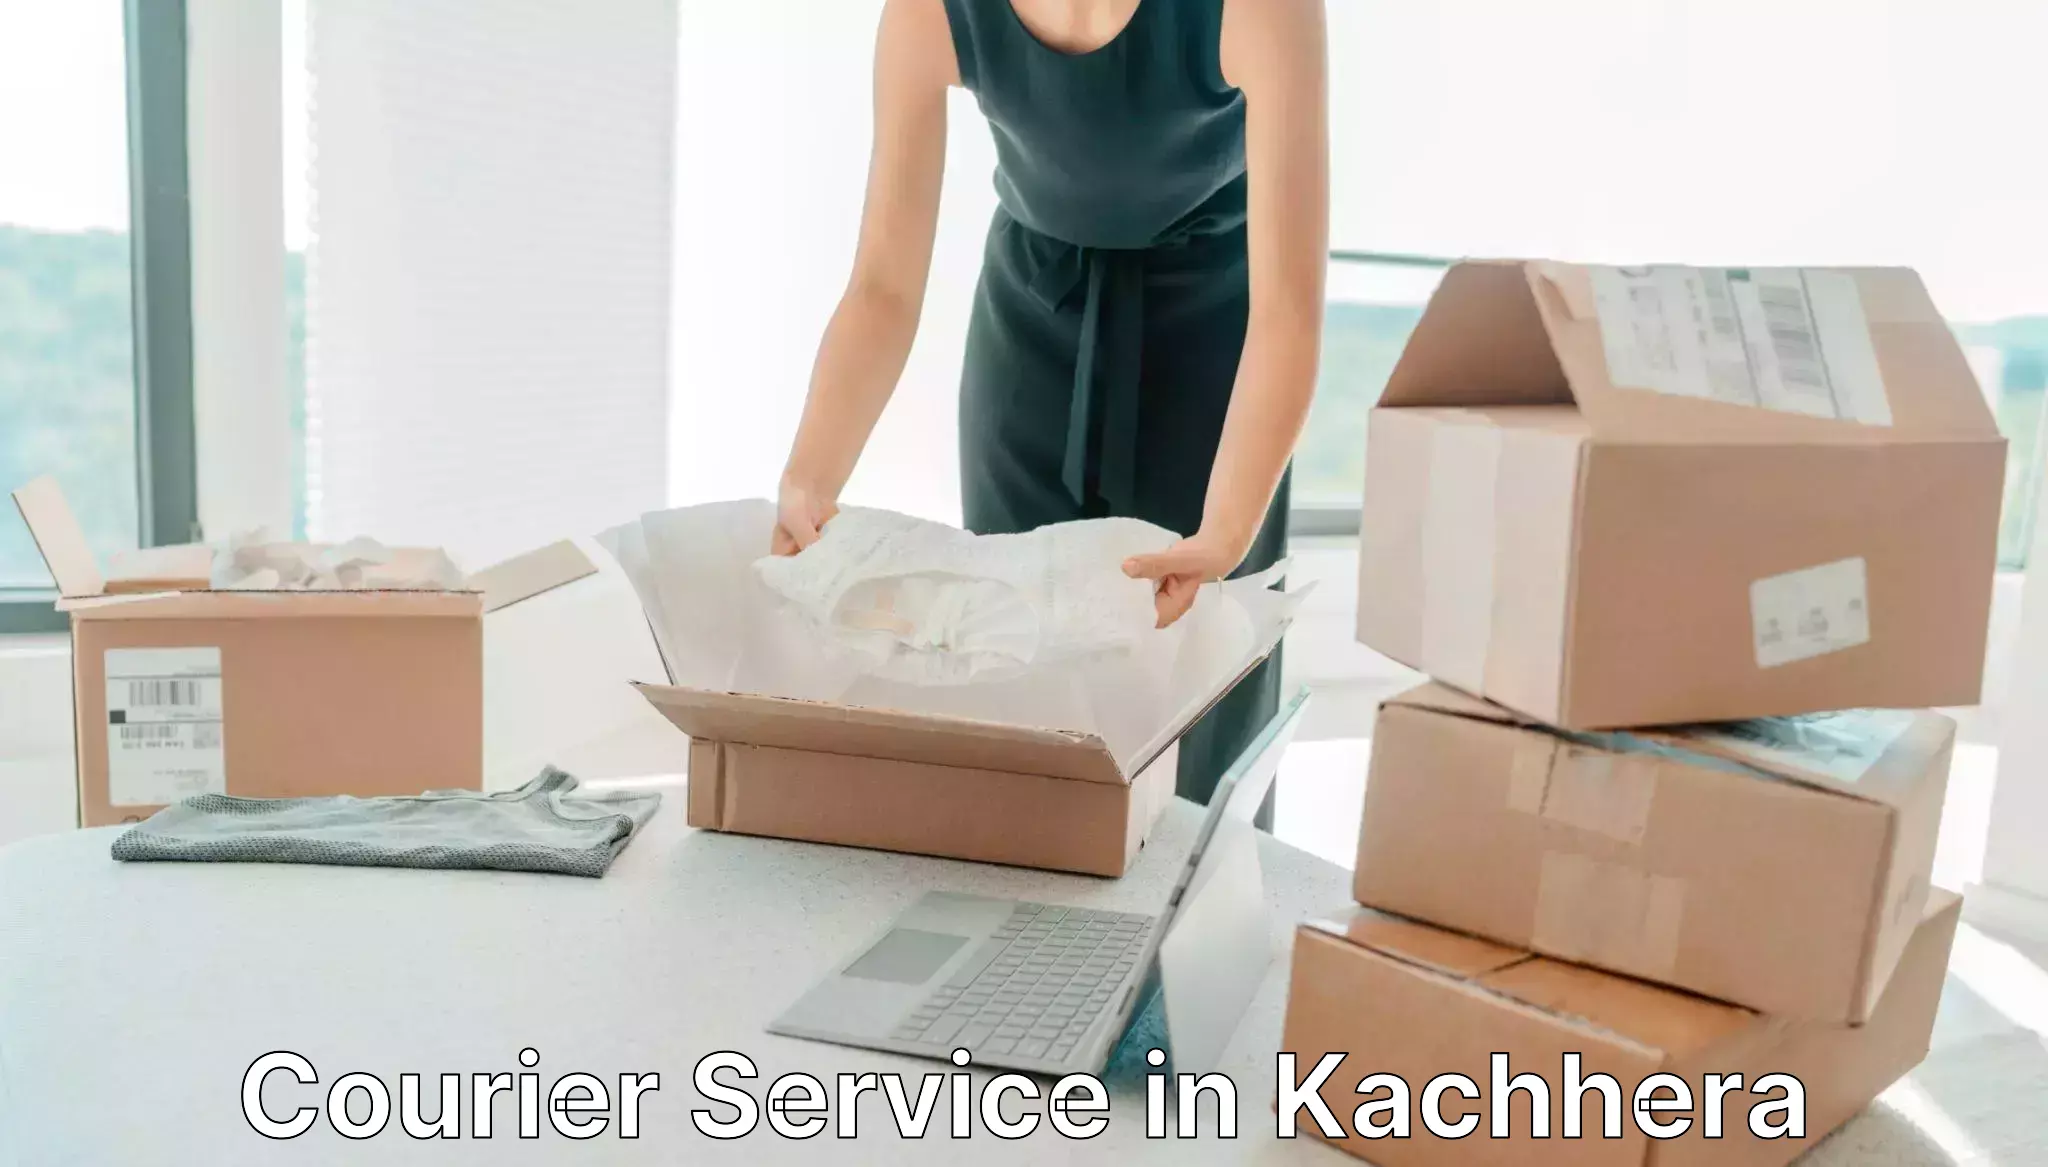 Quick booking process in Kachhera